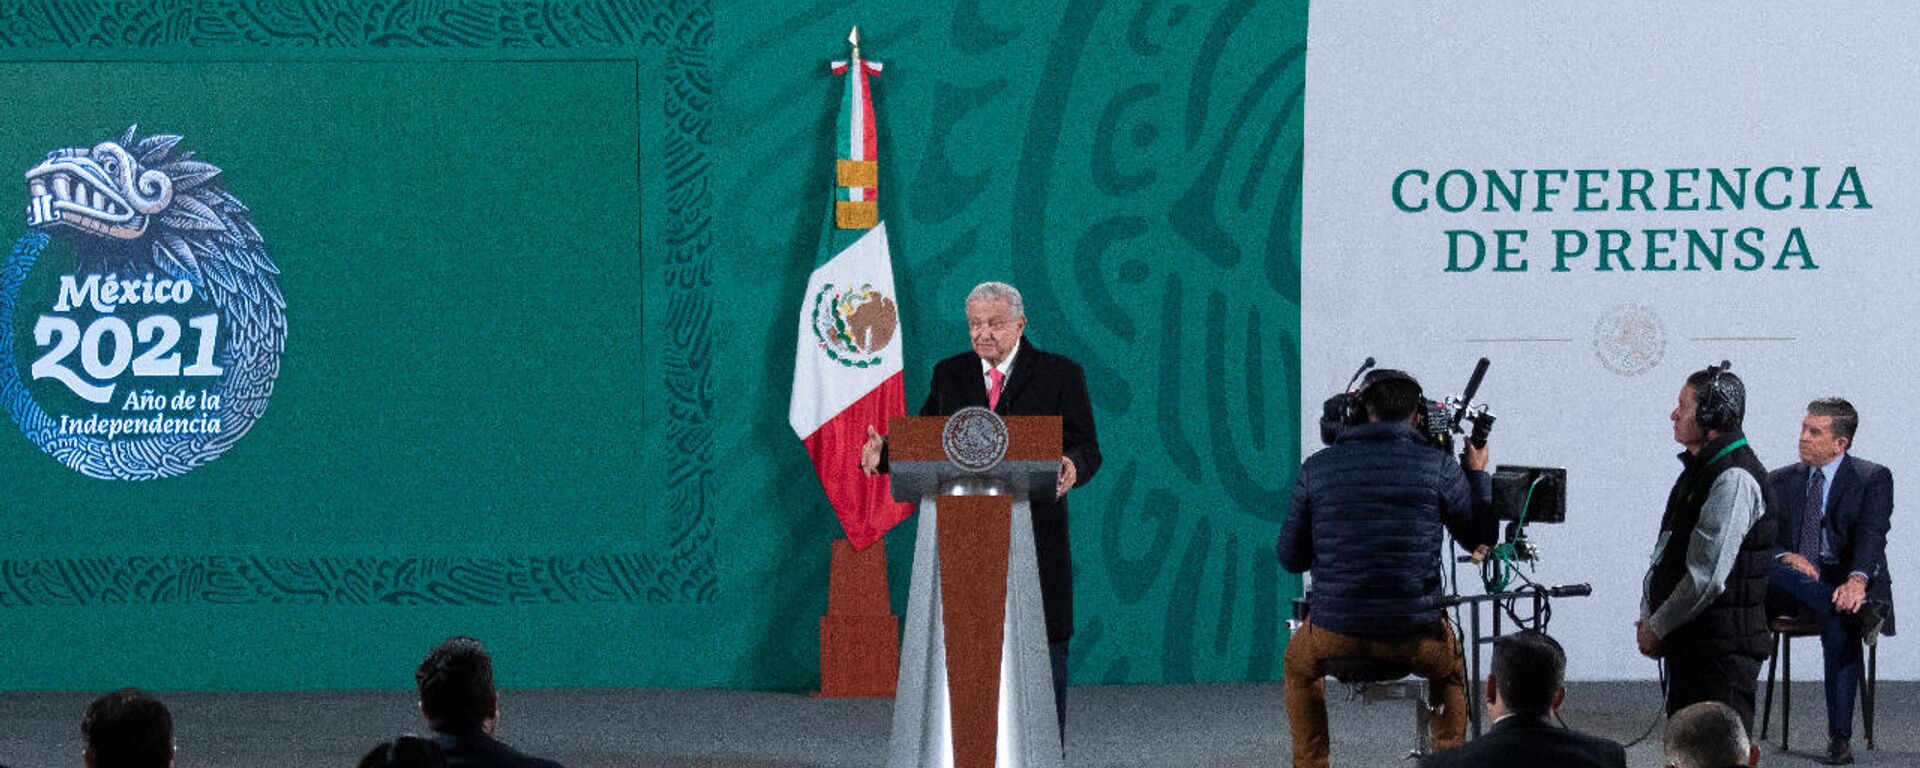 El presidente de México, Andrés Manuel López Obrador. - Sputnik Mundo, 1920, 06.12.2021